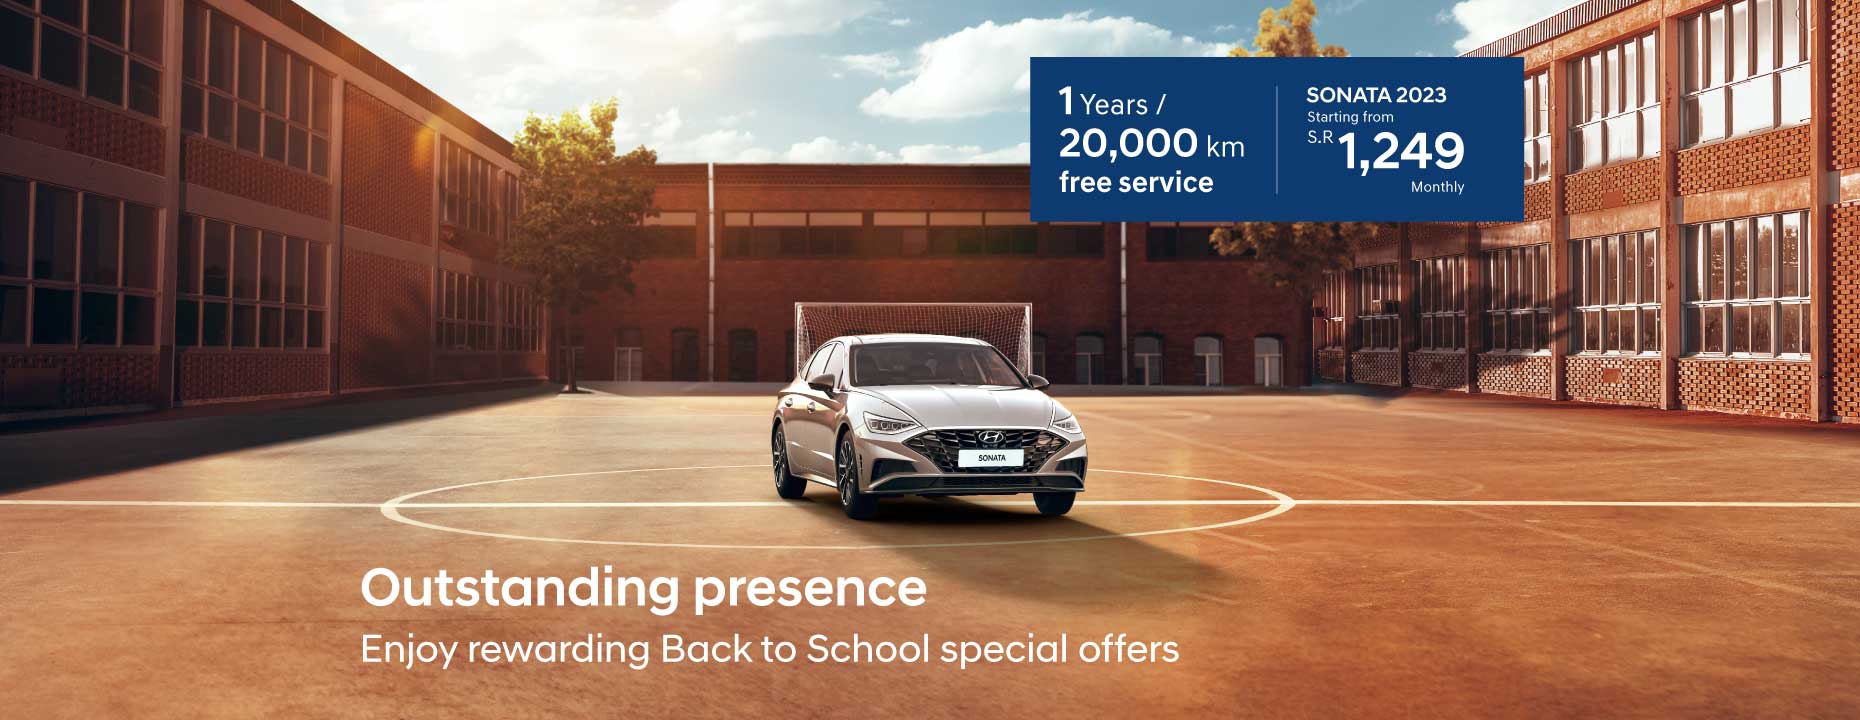 driving school campaign